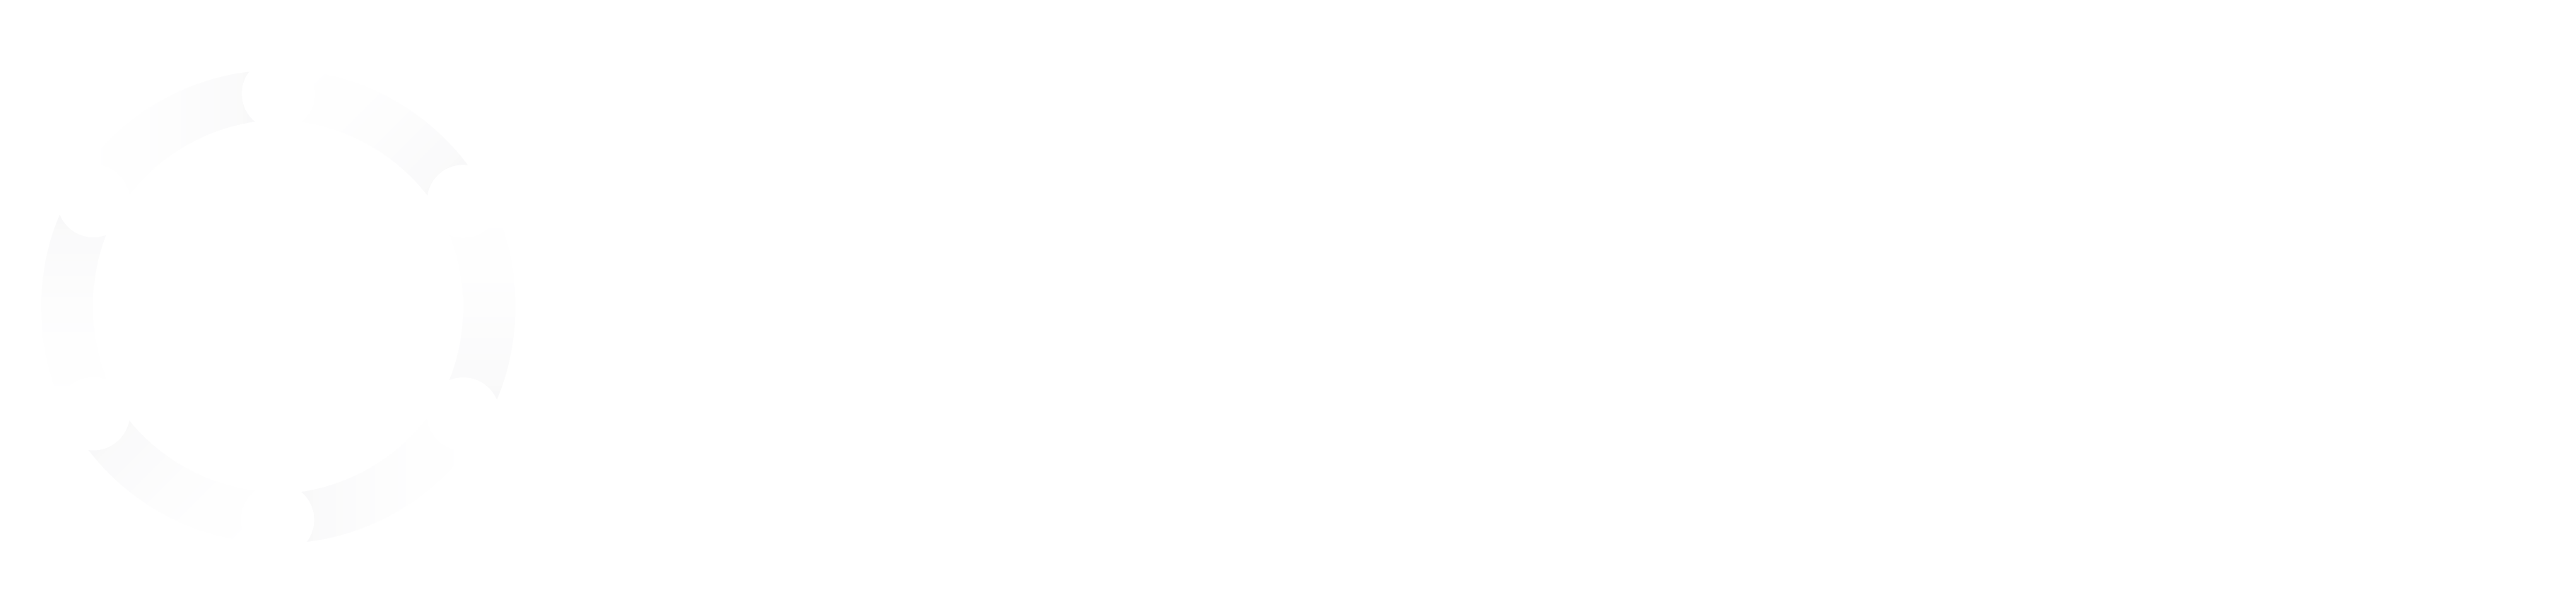 BenefitHub Logo Variations_White Logo